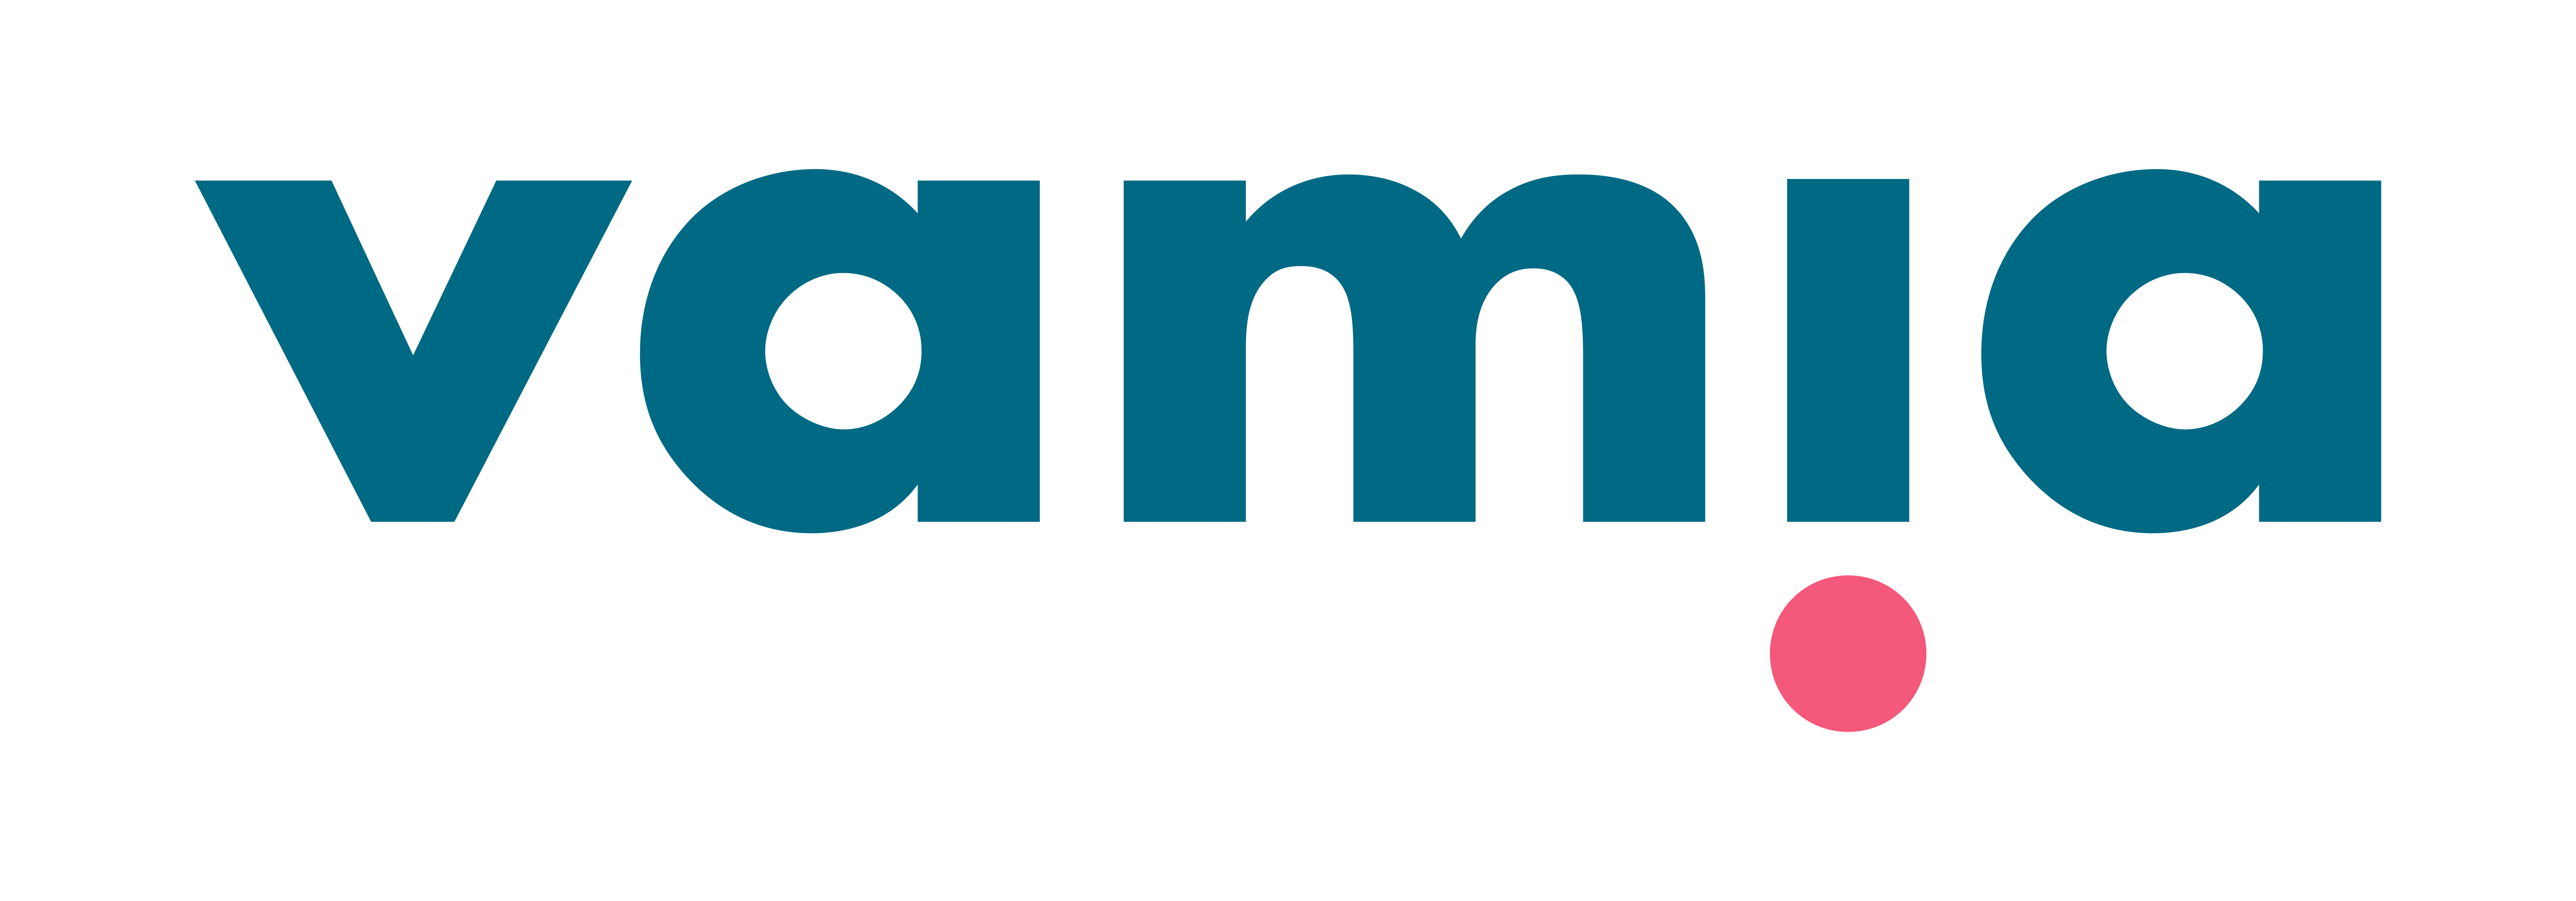 Vamia logo